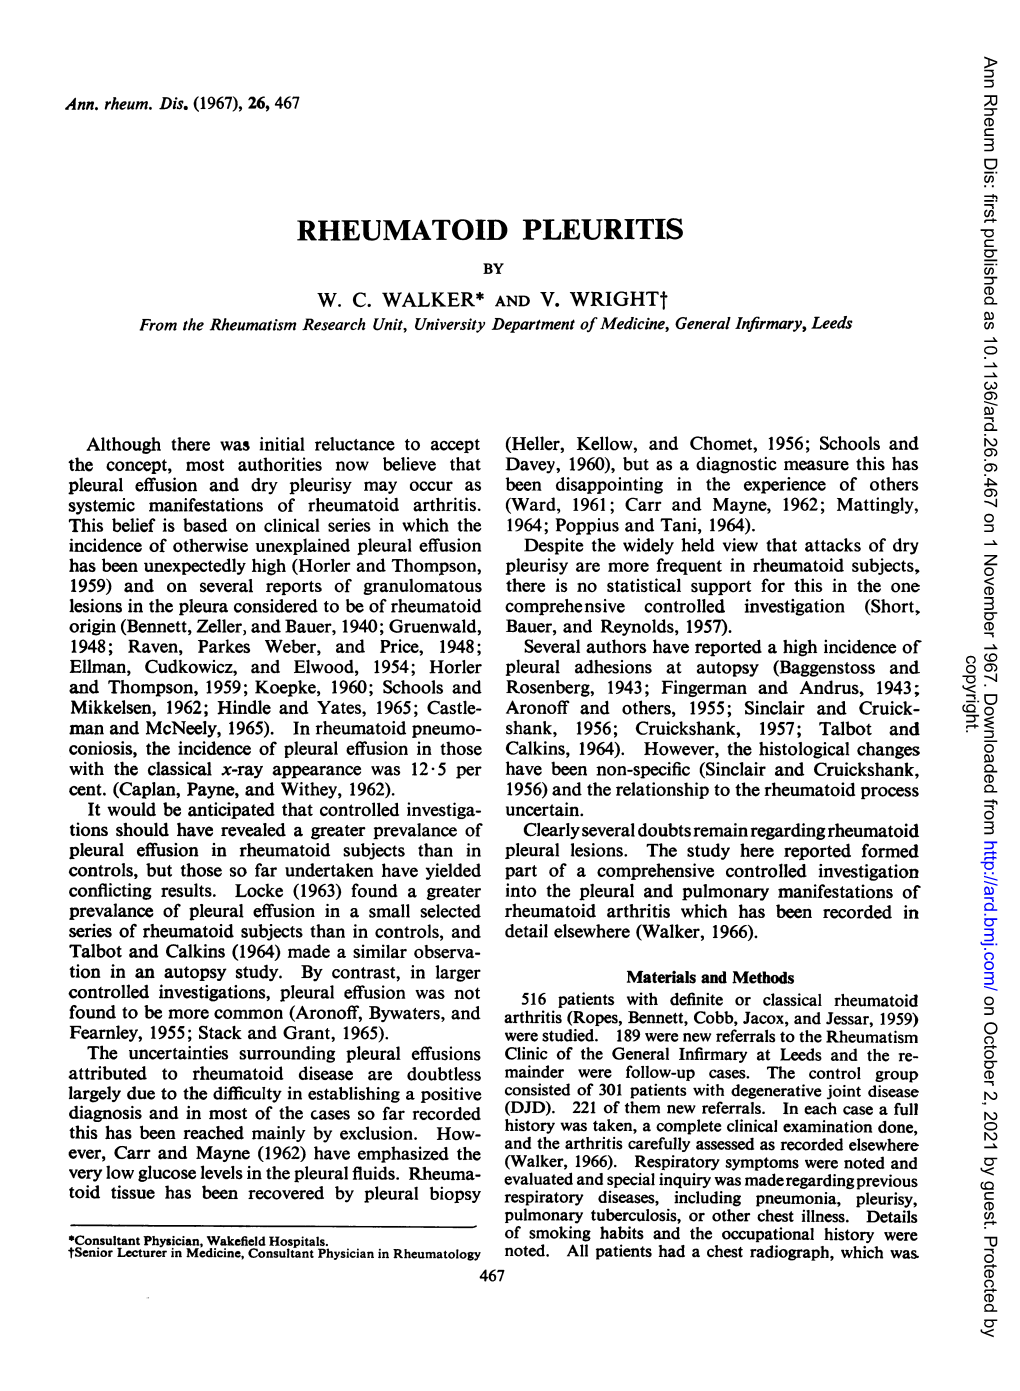 Rheumatoid Pleuritis by W